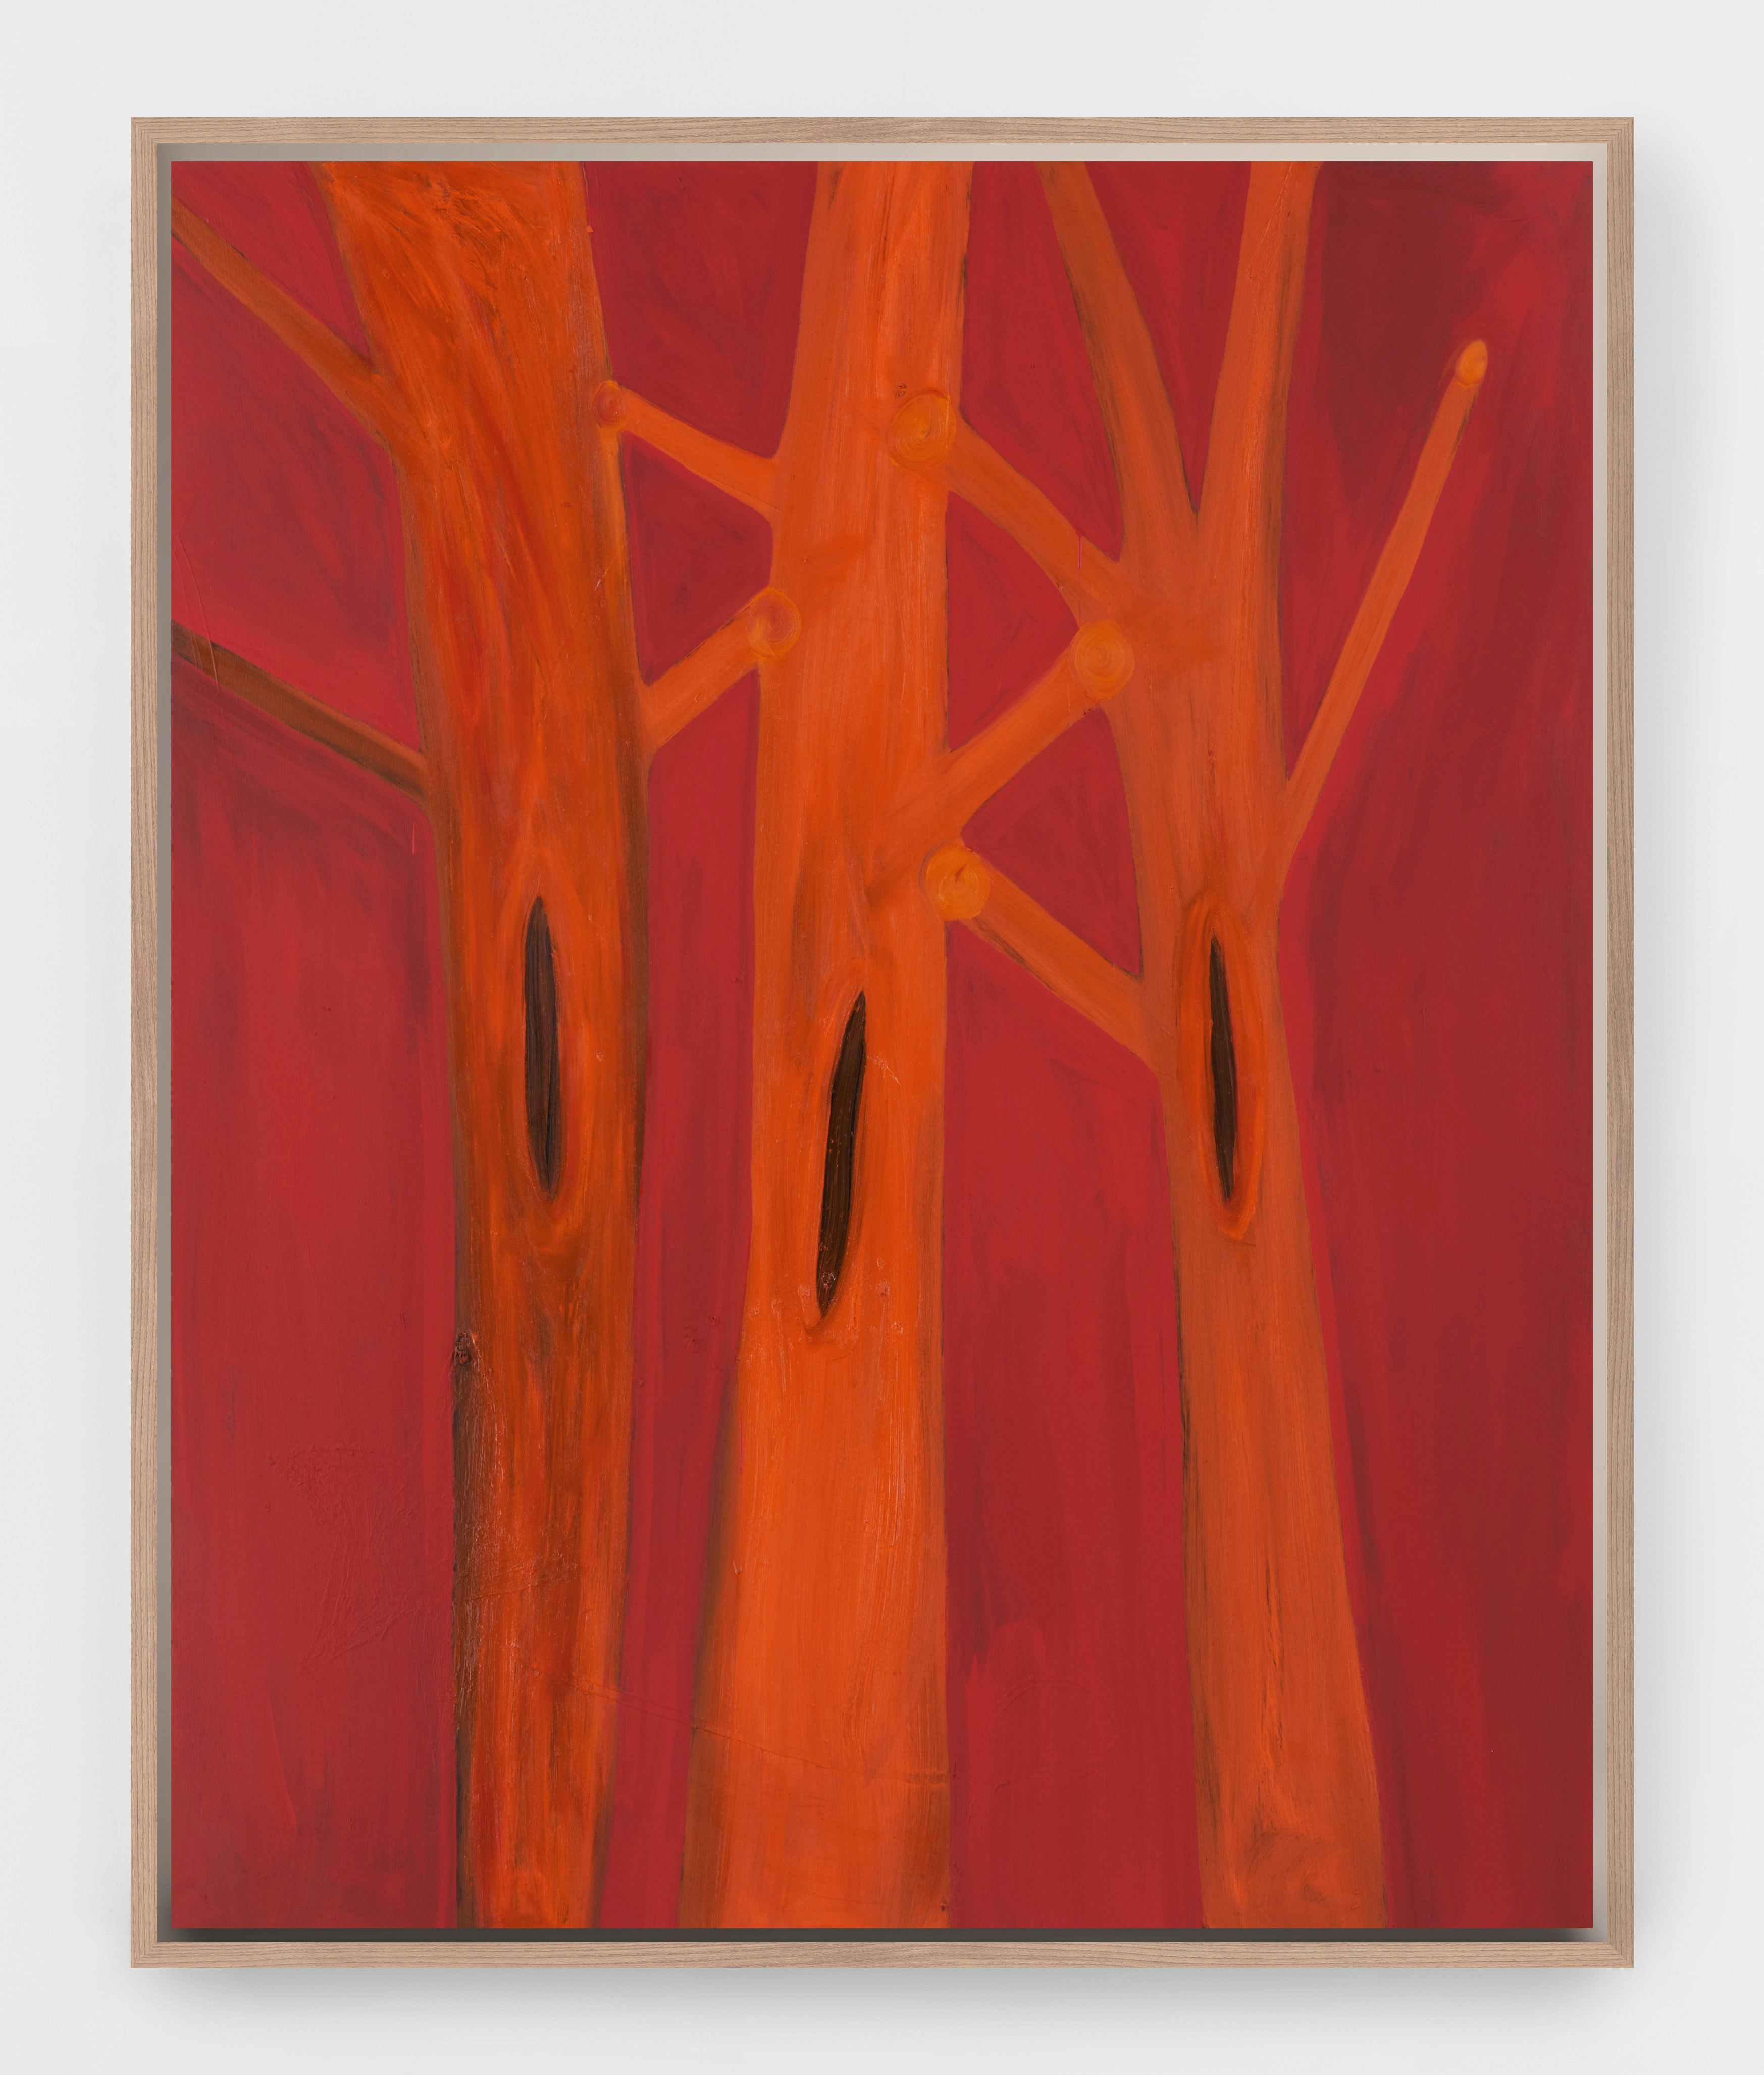 Marcus Jahmal, <em>Tree still</em>, 2021. Oil on canvas, 60 x 48 inches. © Marcus Jahmal. Courtesy the artist and Anton Kern Gallery, New York.